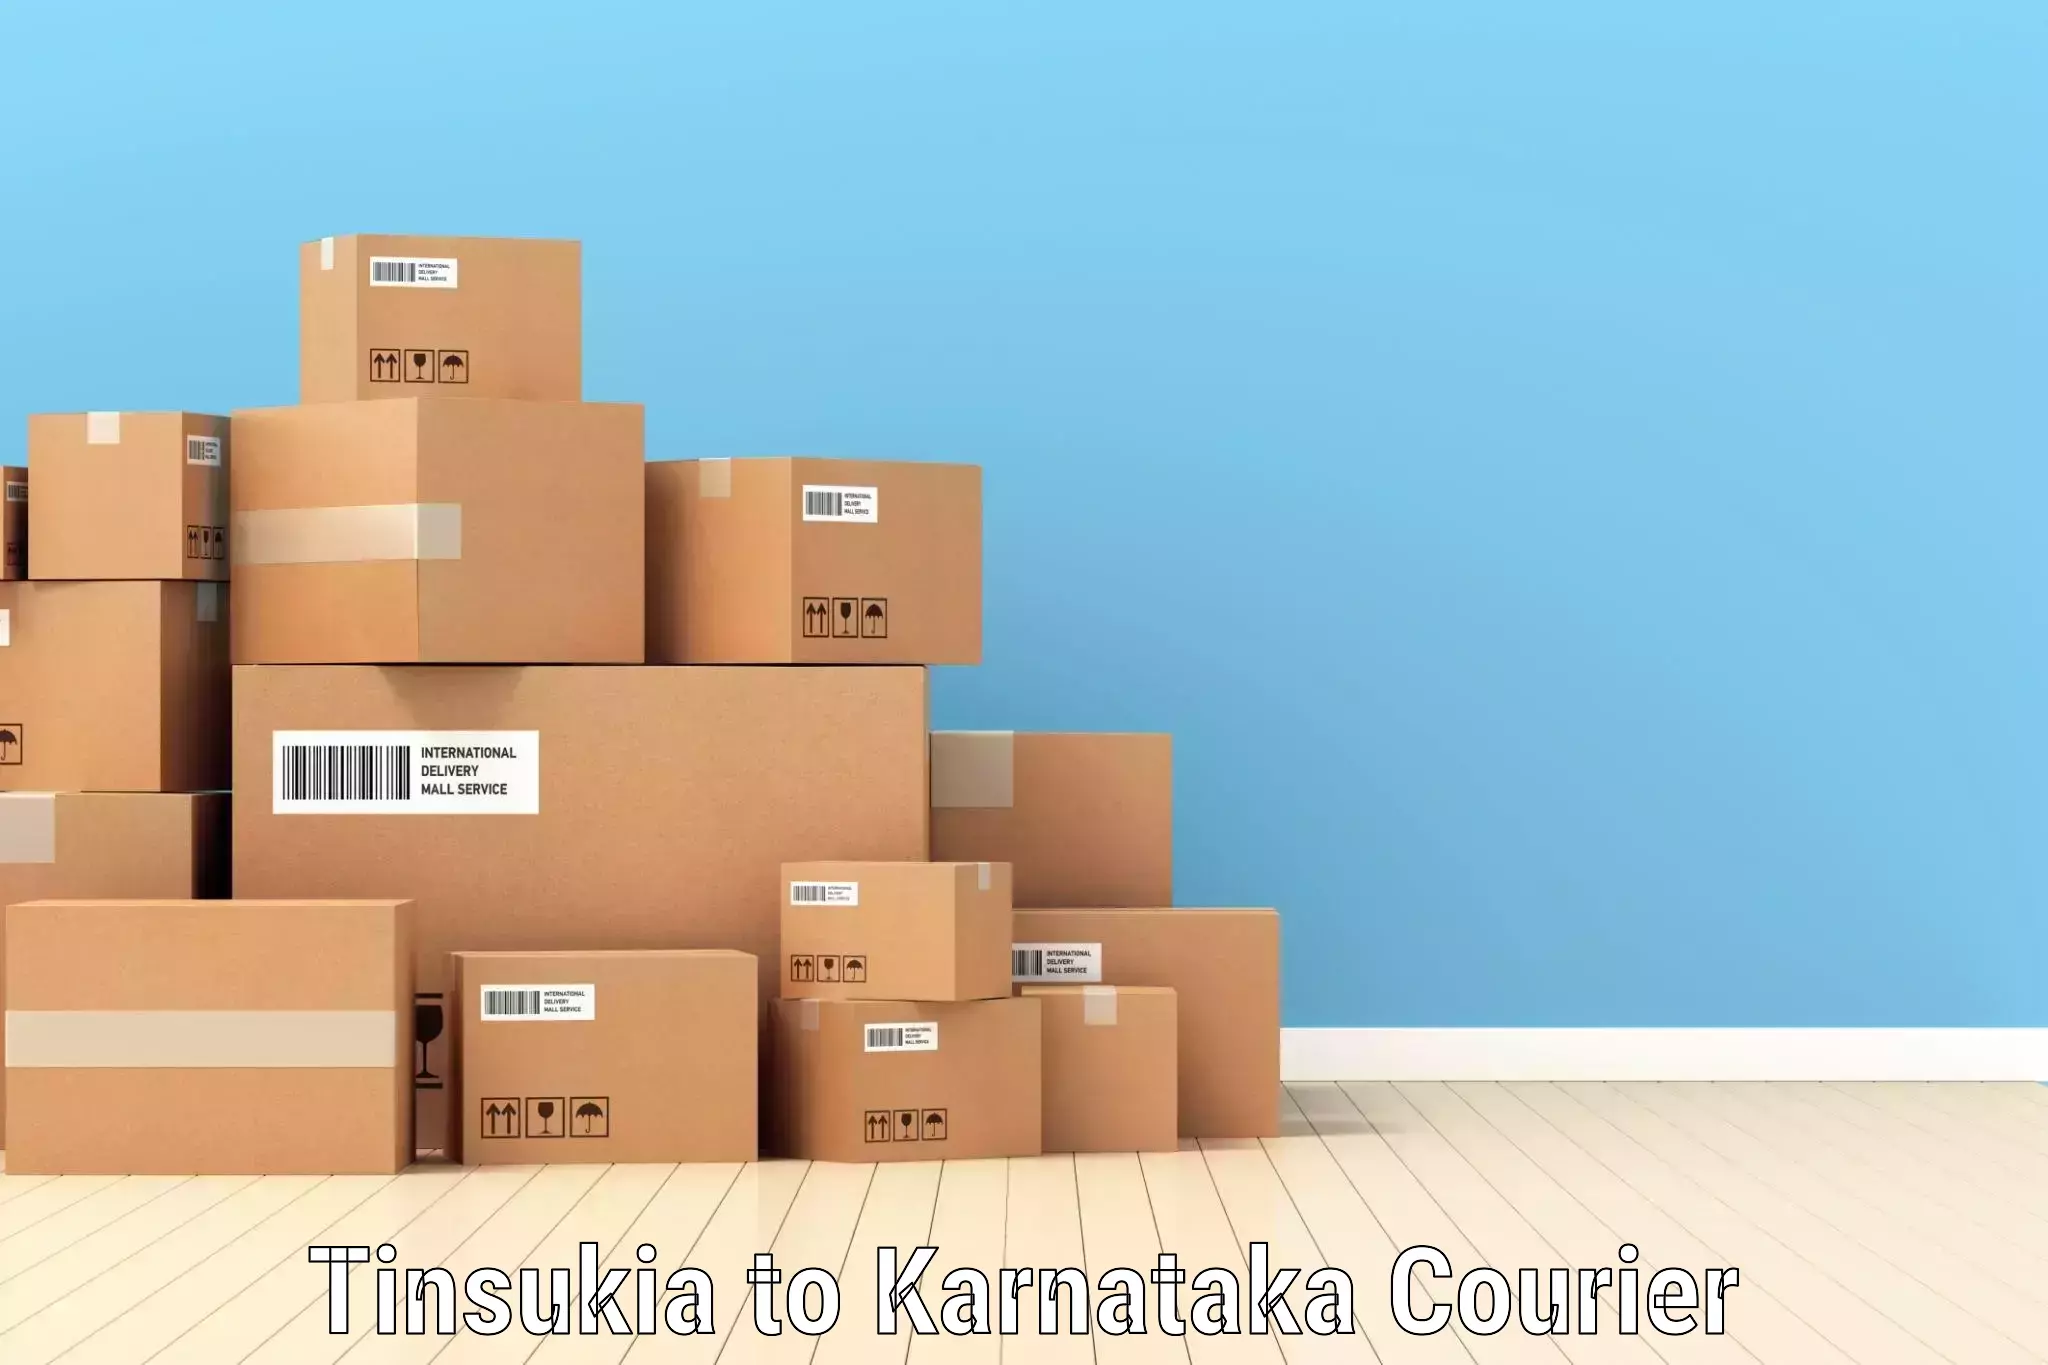 State-of-the-art courier technology Tinsukia to NITTE Mangaluru